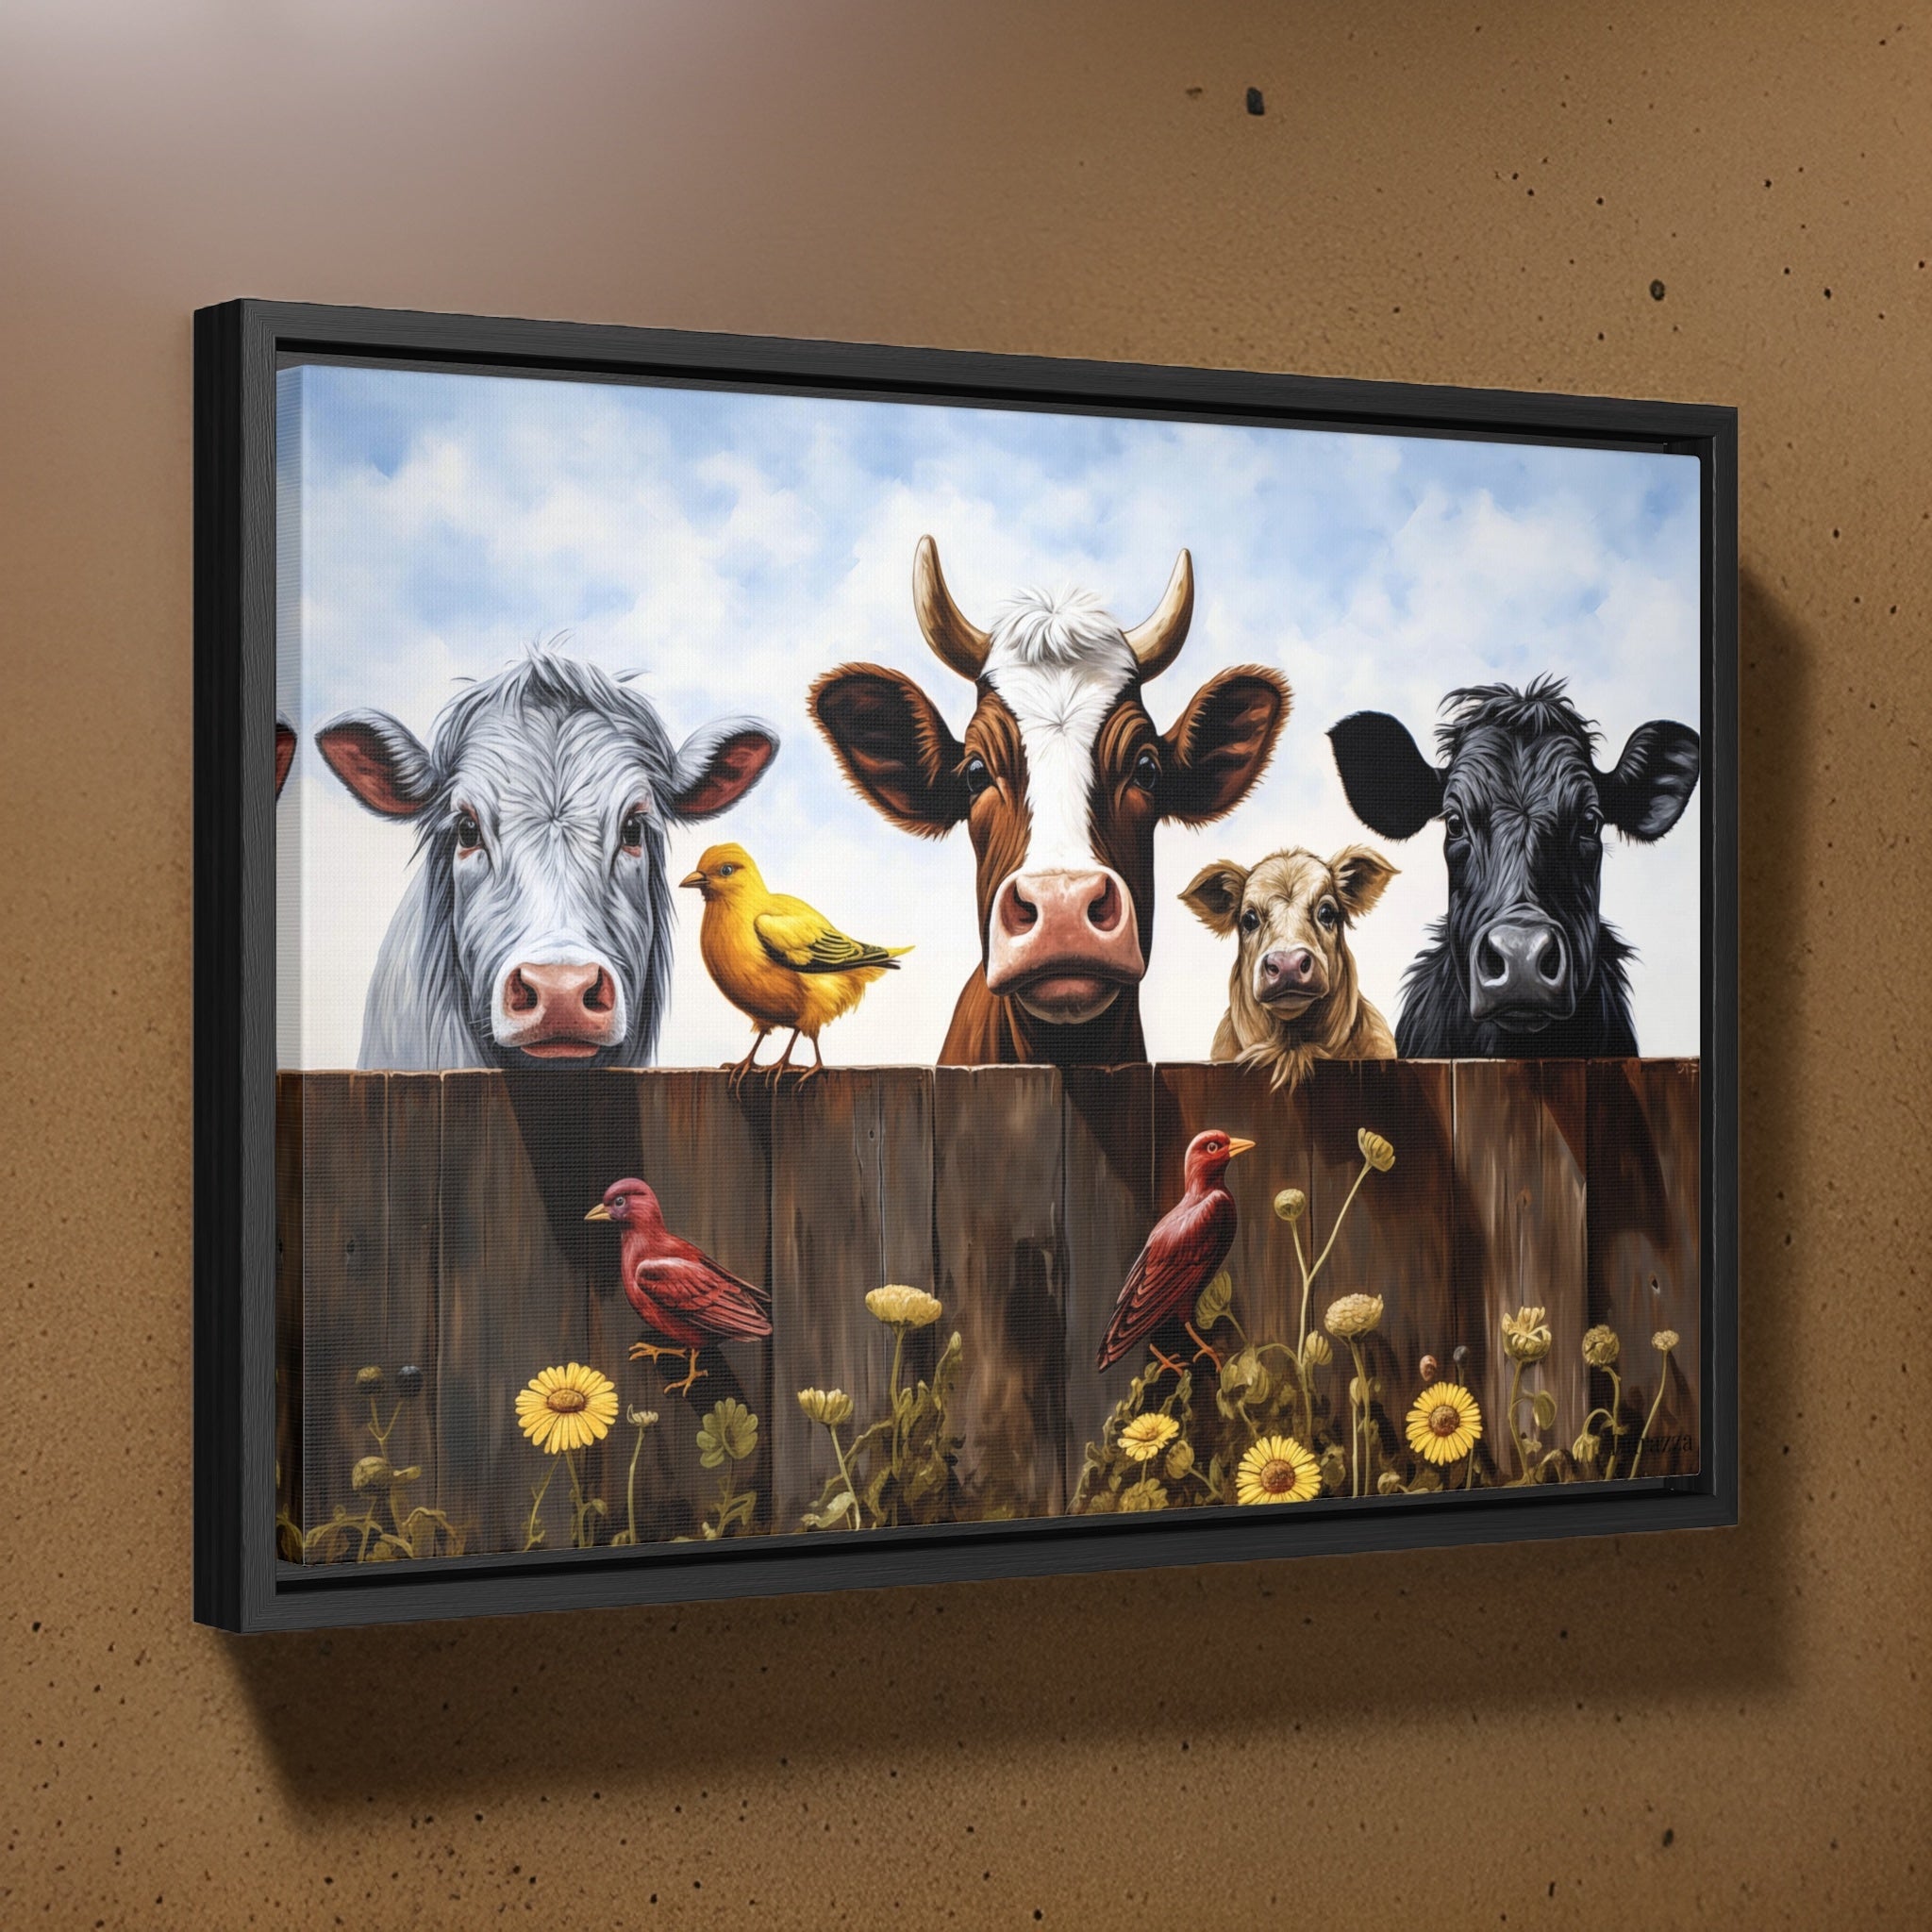 Happy Farmyard Wall Art: Cows Looking Over Rustic Fence